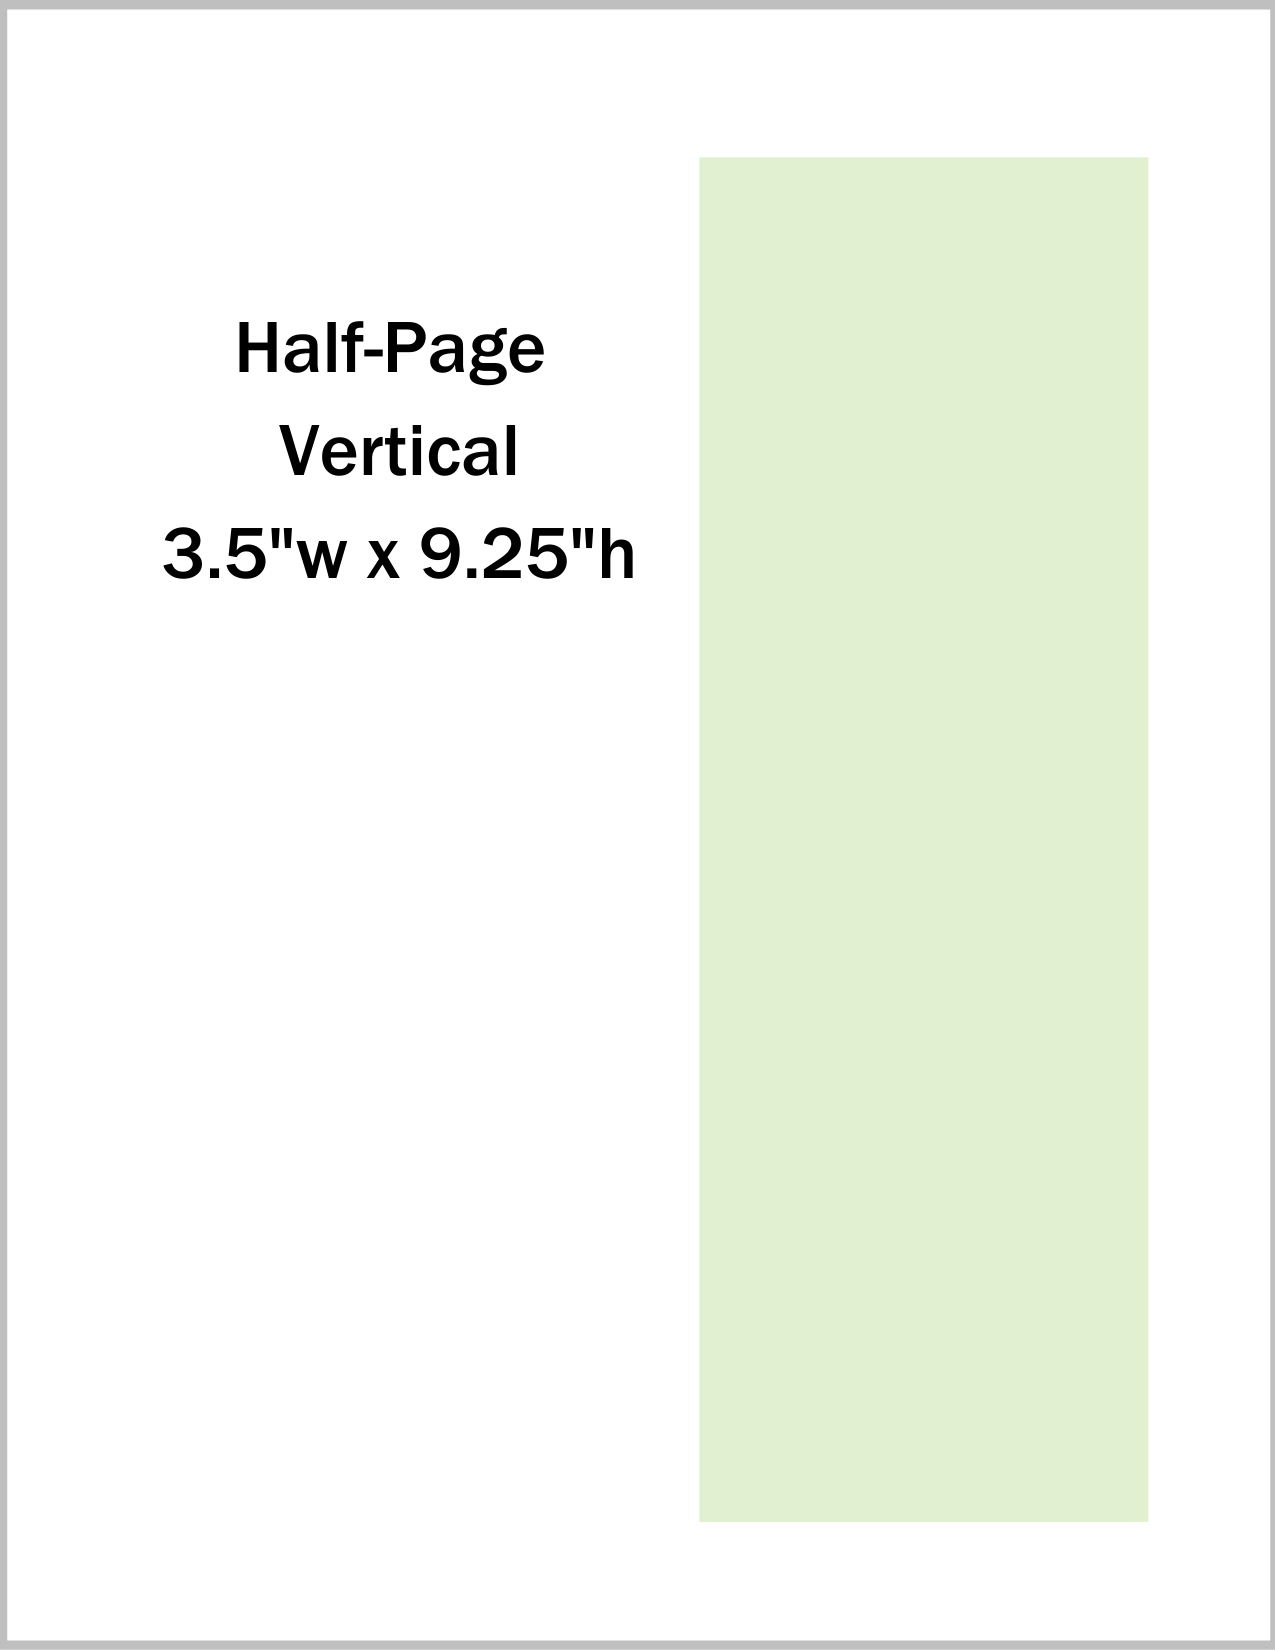 Half-Page Vertical